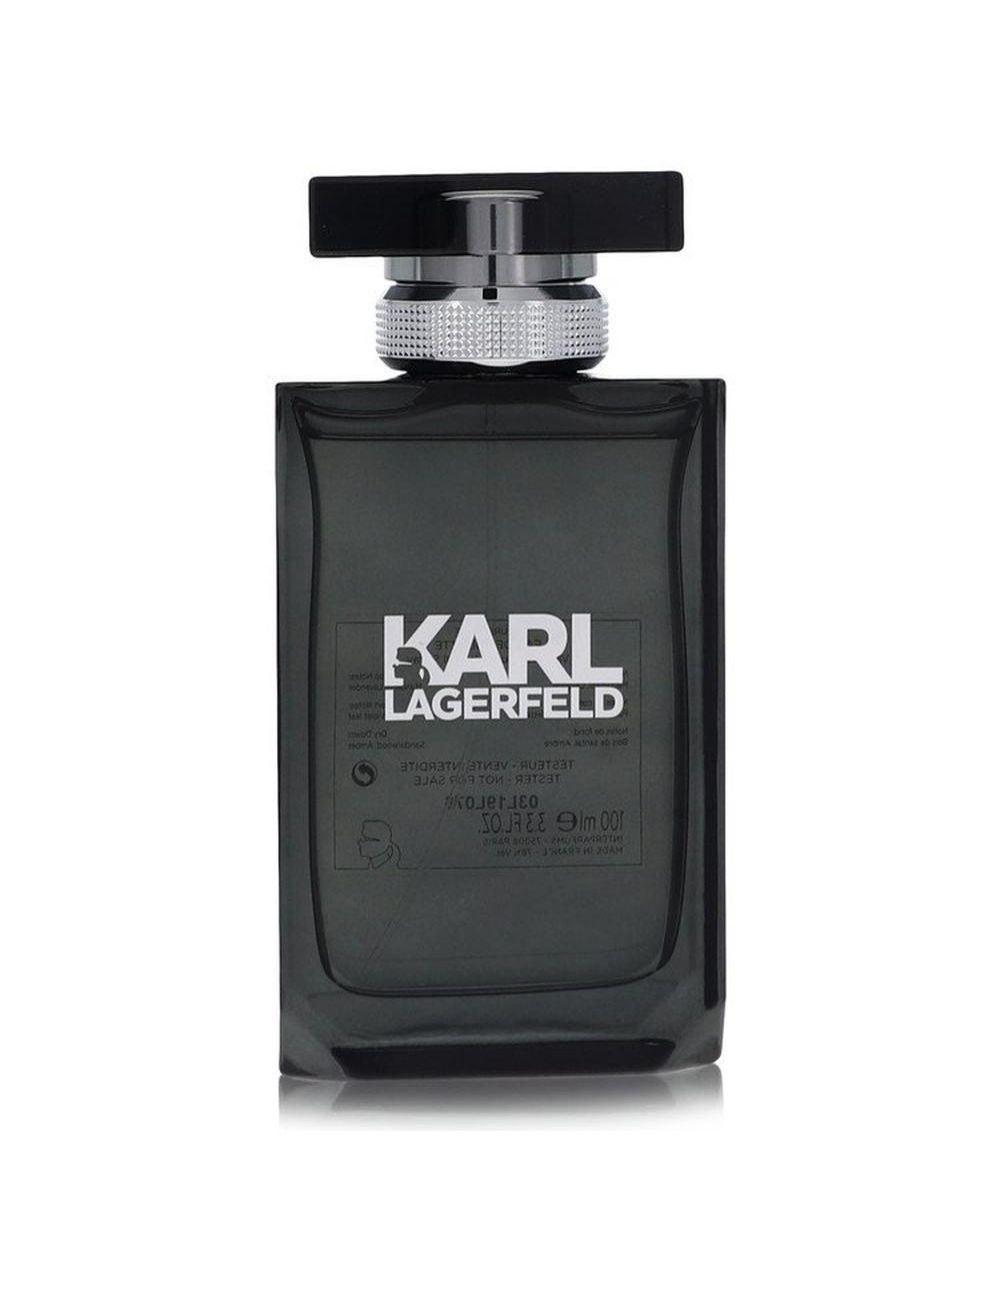 Karl Lagerfeld Eau De Toilette Spray for Men | Rivers Australia